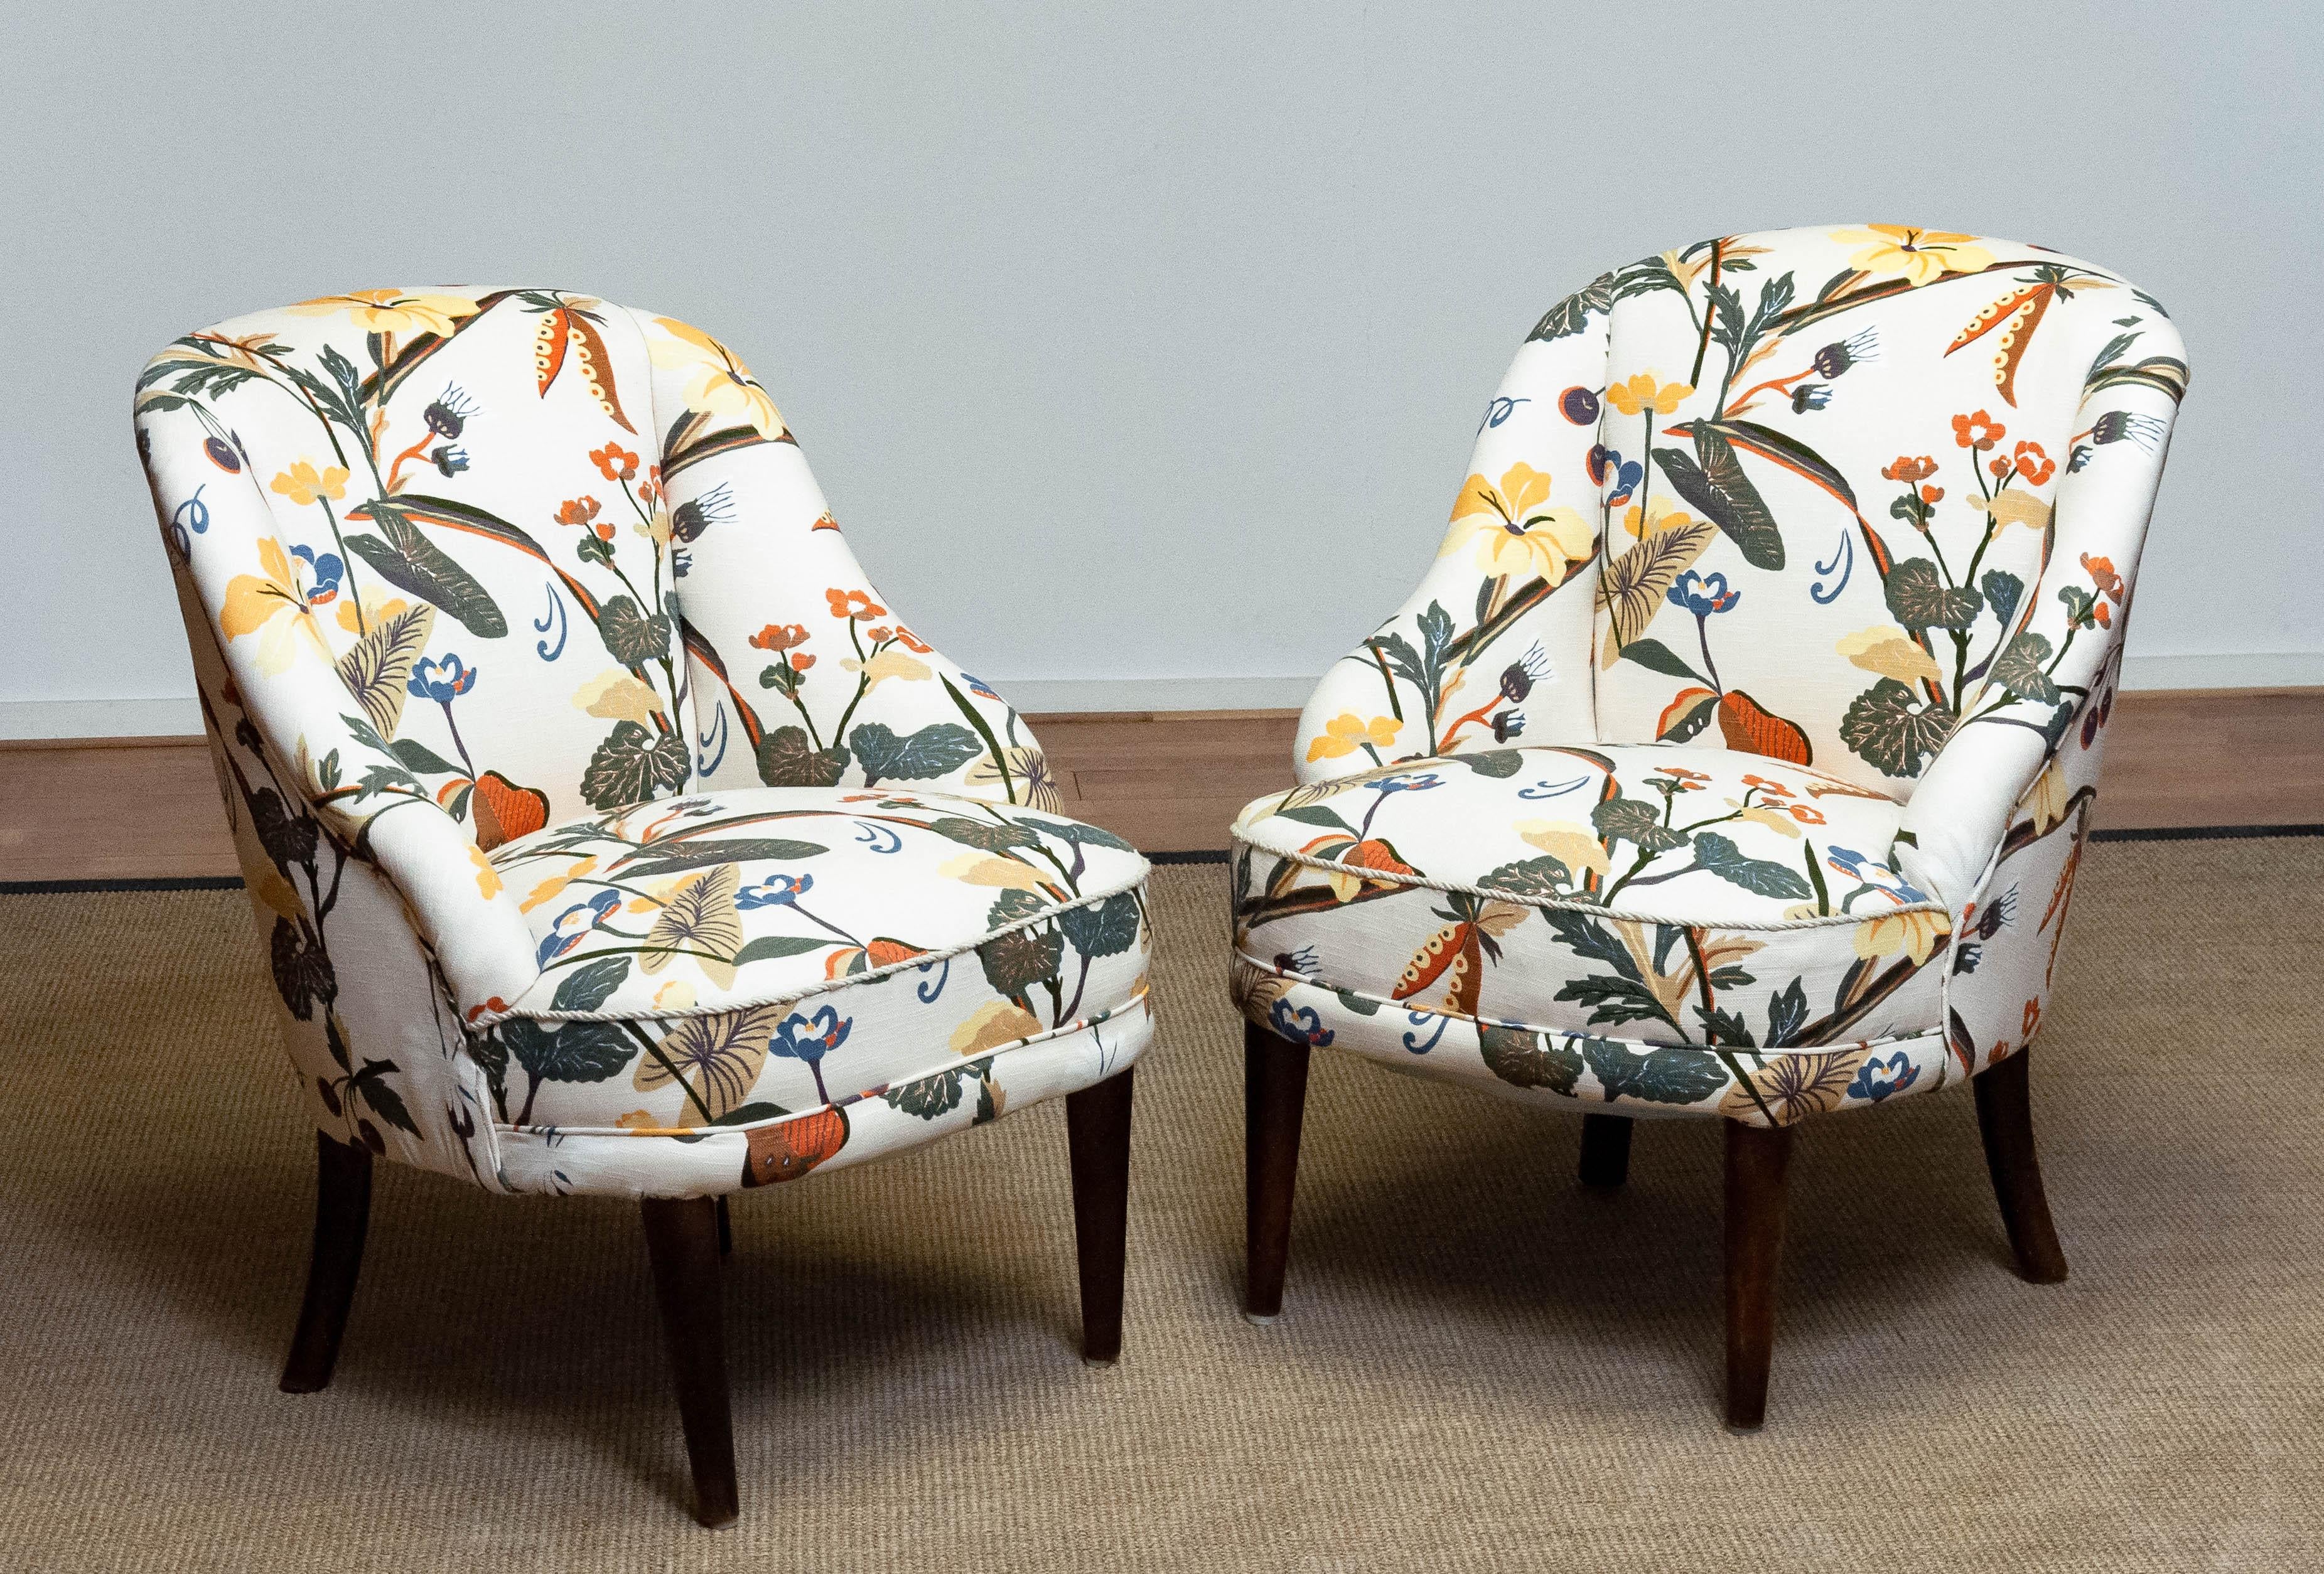 '40s Floral Printed Linen, J. Frank Style, New Upholstered Danish Slipper Chair For Sale 7